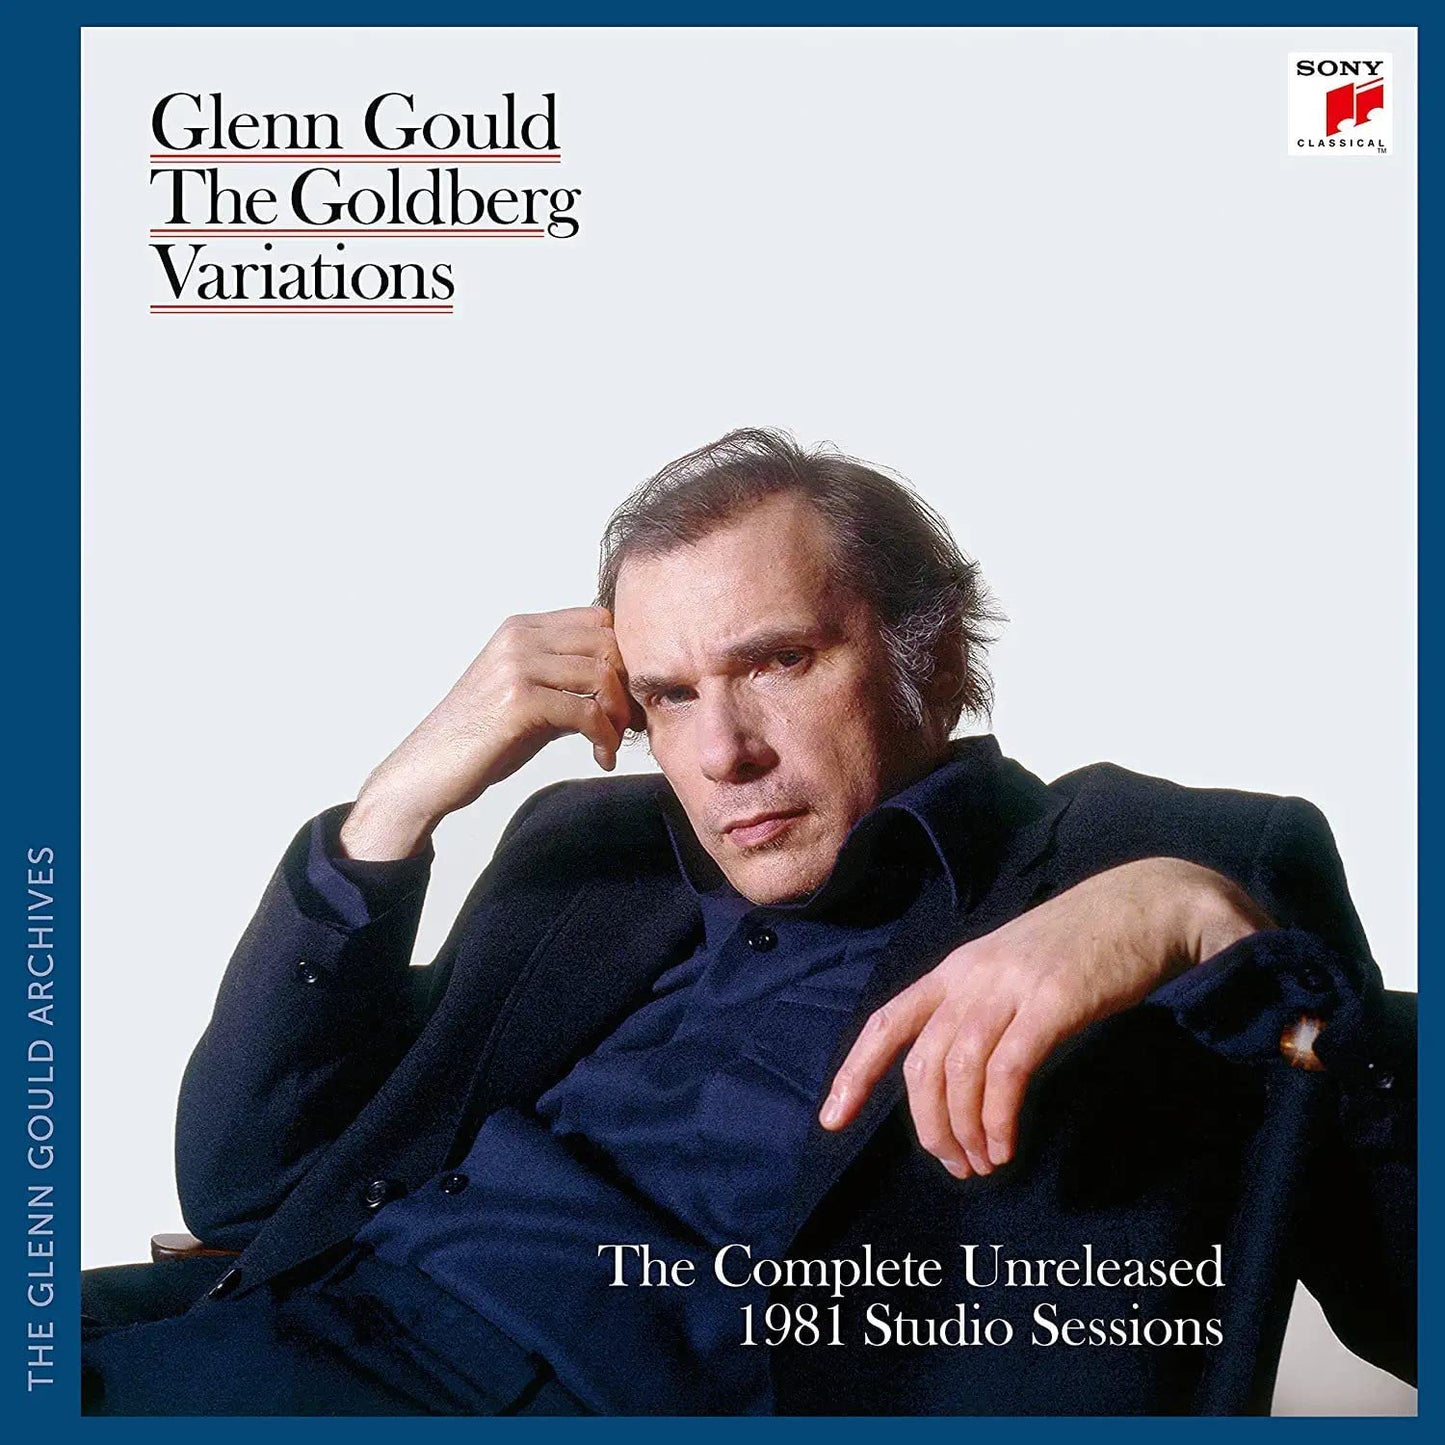 Glenn Gould - Glenn Gould - The Goldberg Variations - The Complete 1981 Studio Sessions - 10CD